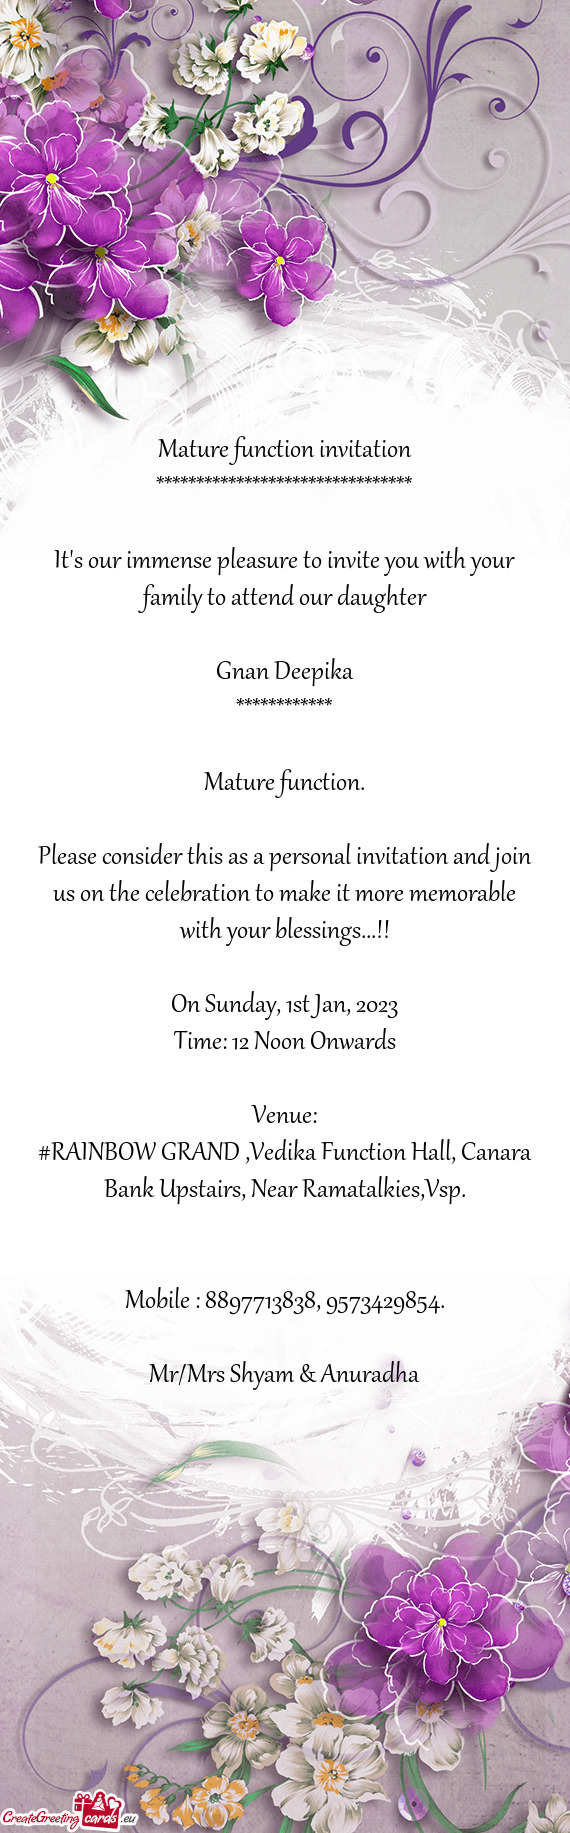 #RAINBOW GRAND ,Vedika Function Hall, Canara Bank Upstairs, Near Ramatalkies,Vsp